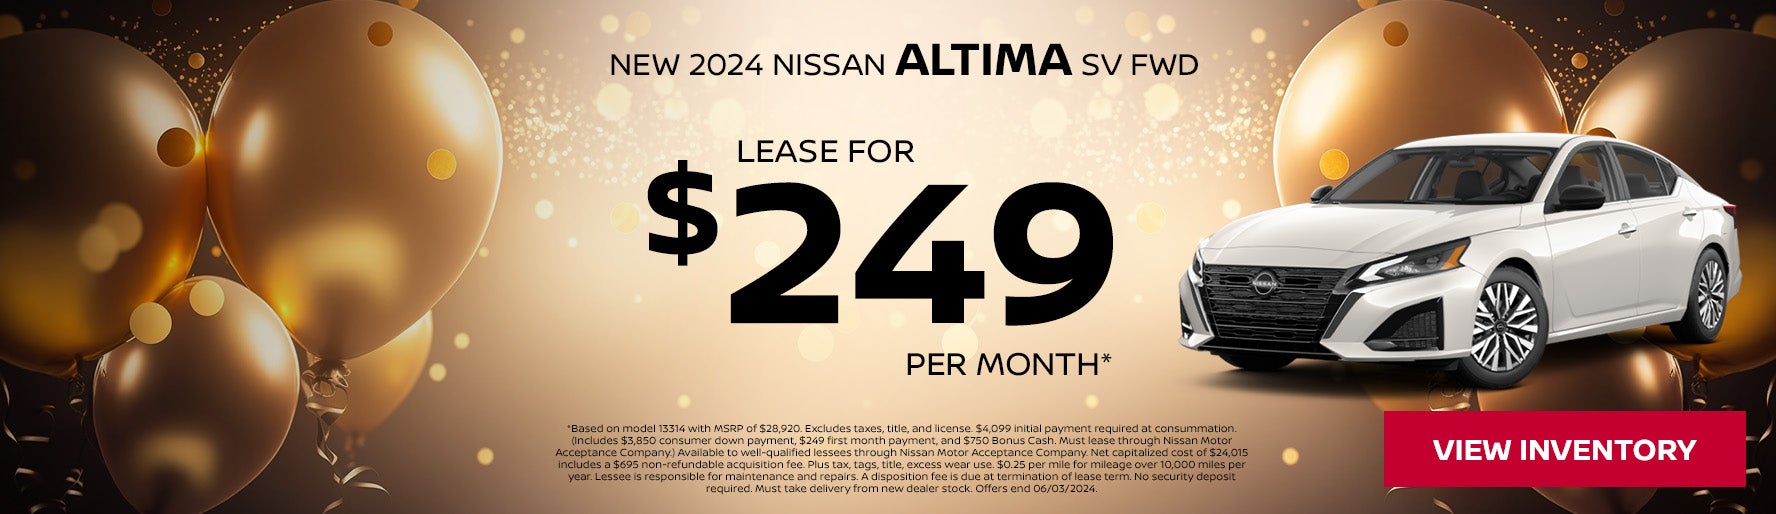 2024 Nissan Altima Jackson TN